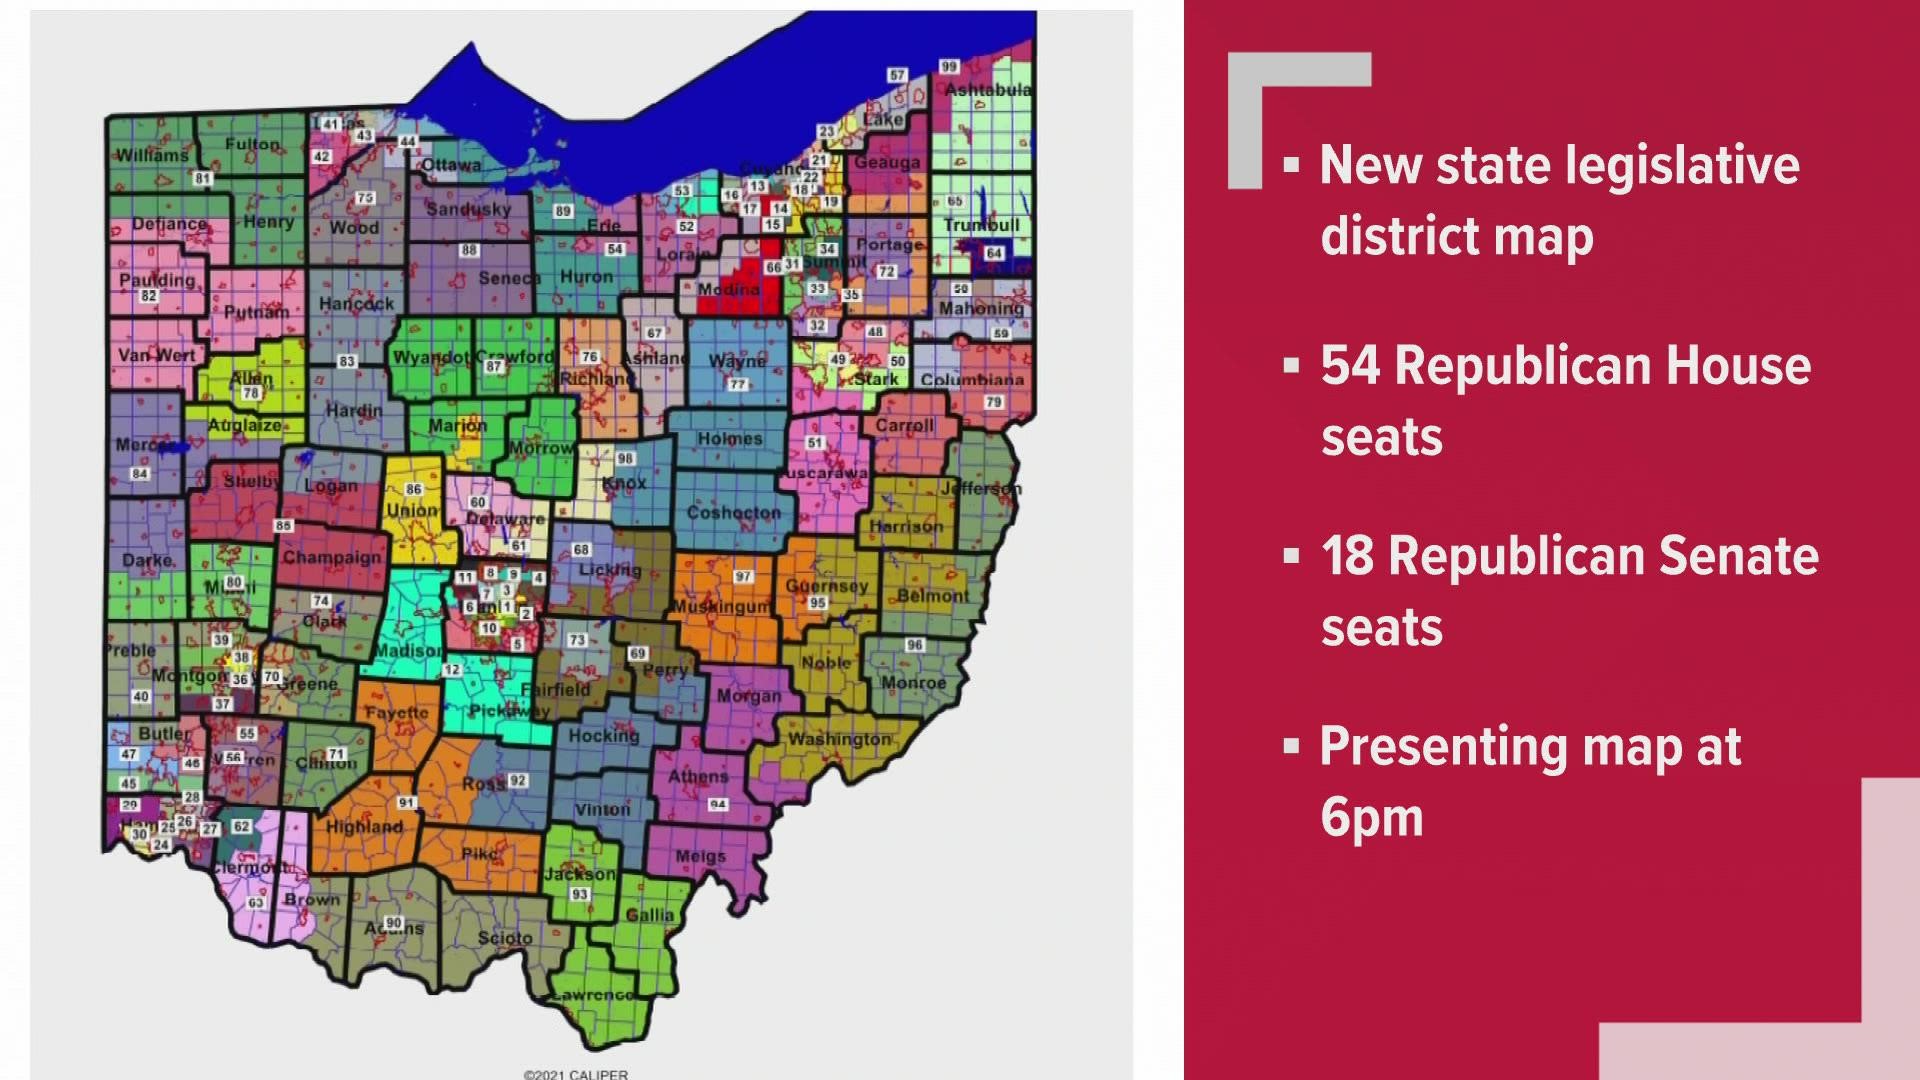 The new map includes 54 Republican House seats and 18 Republican Senate seats.